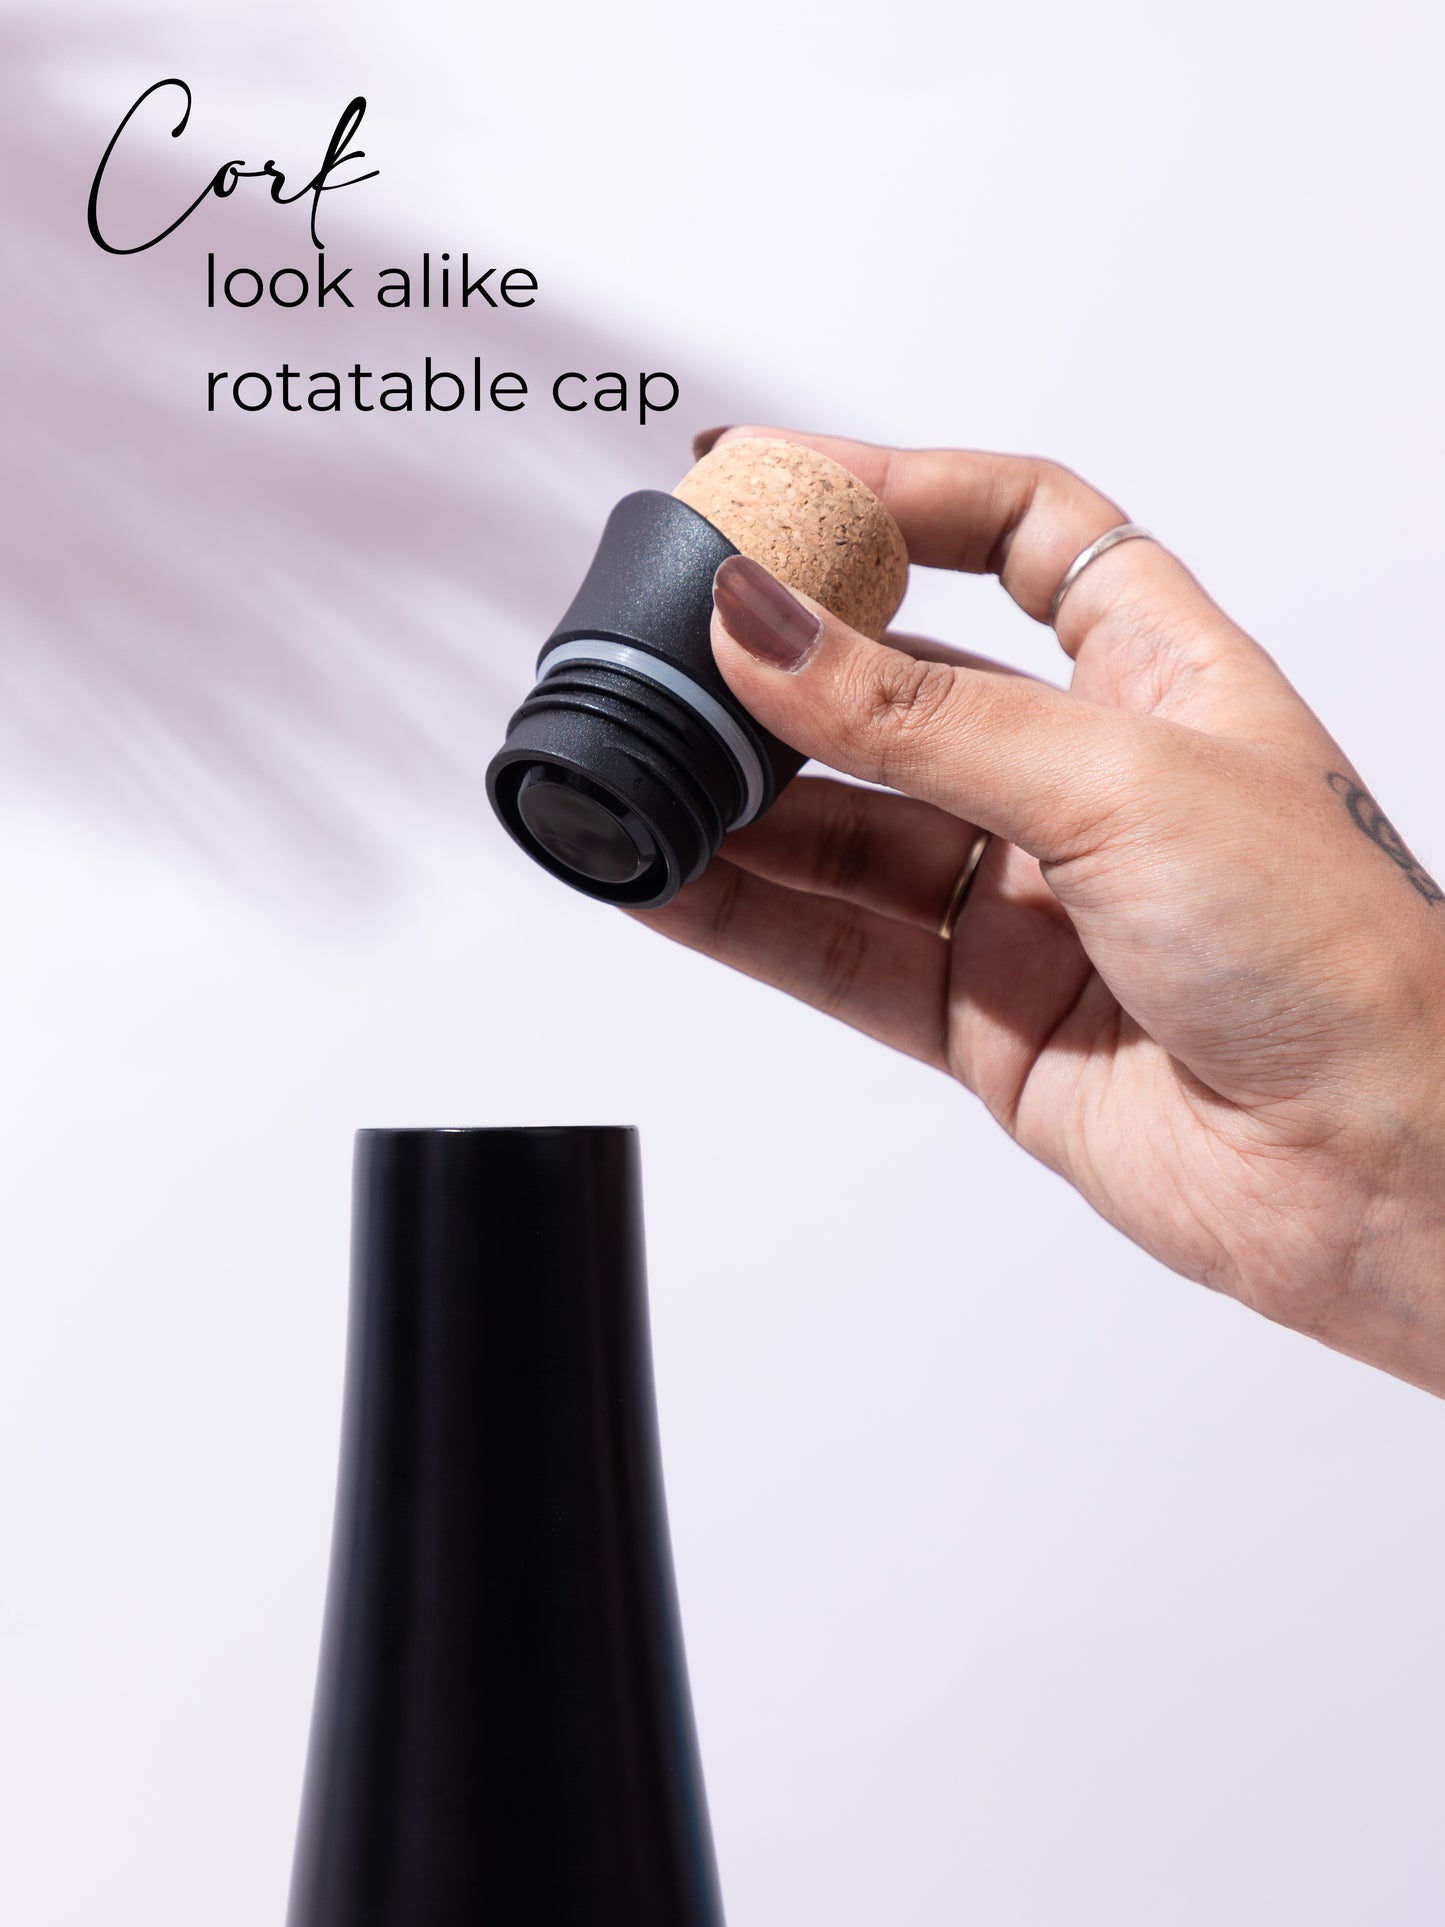 Personalized Recherche Wine Shaped Insulated Bottles